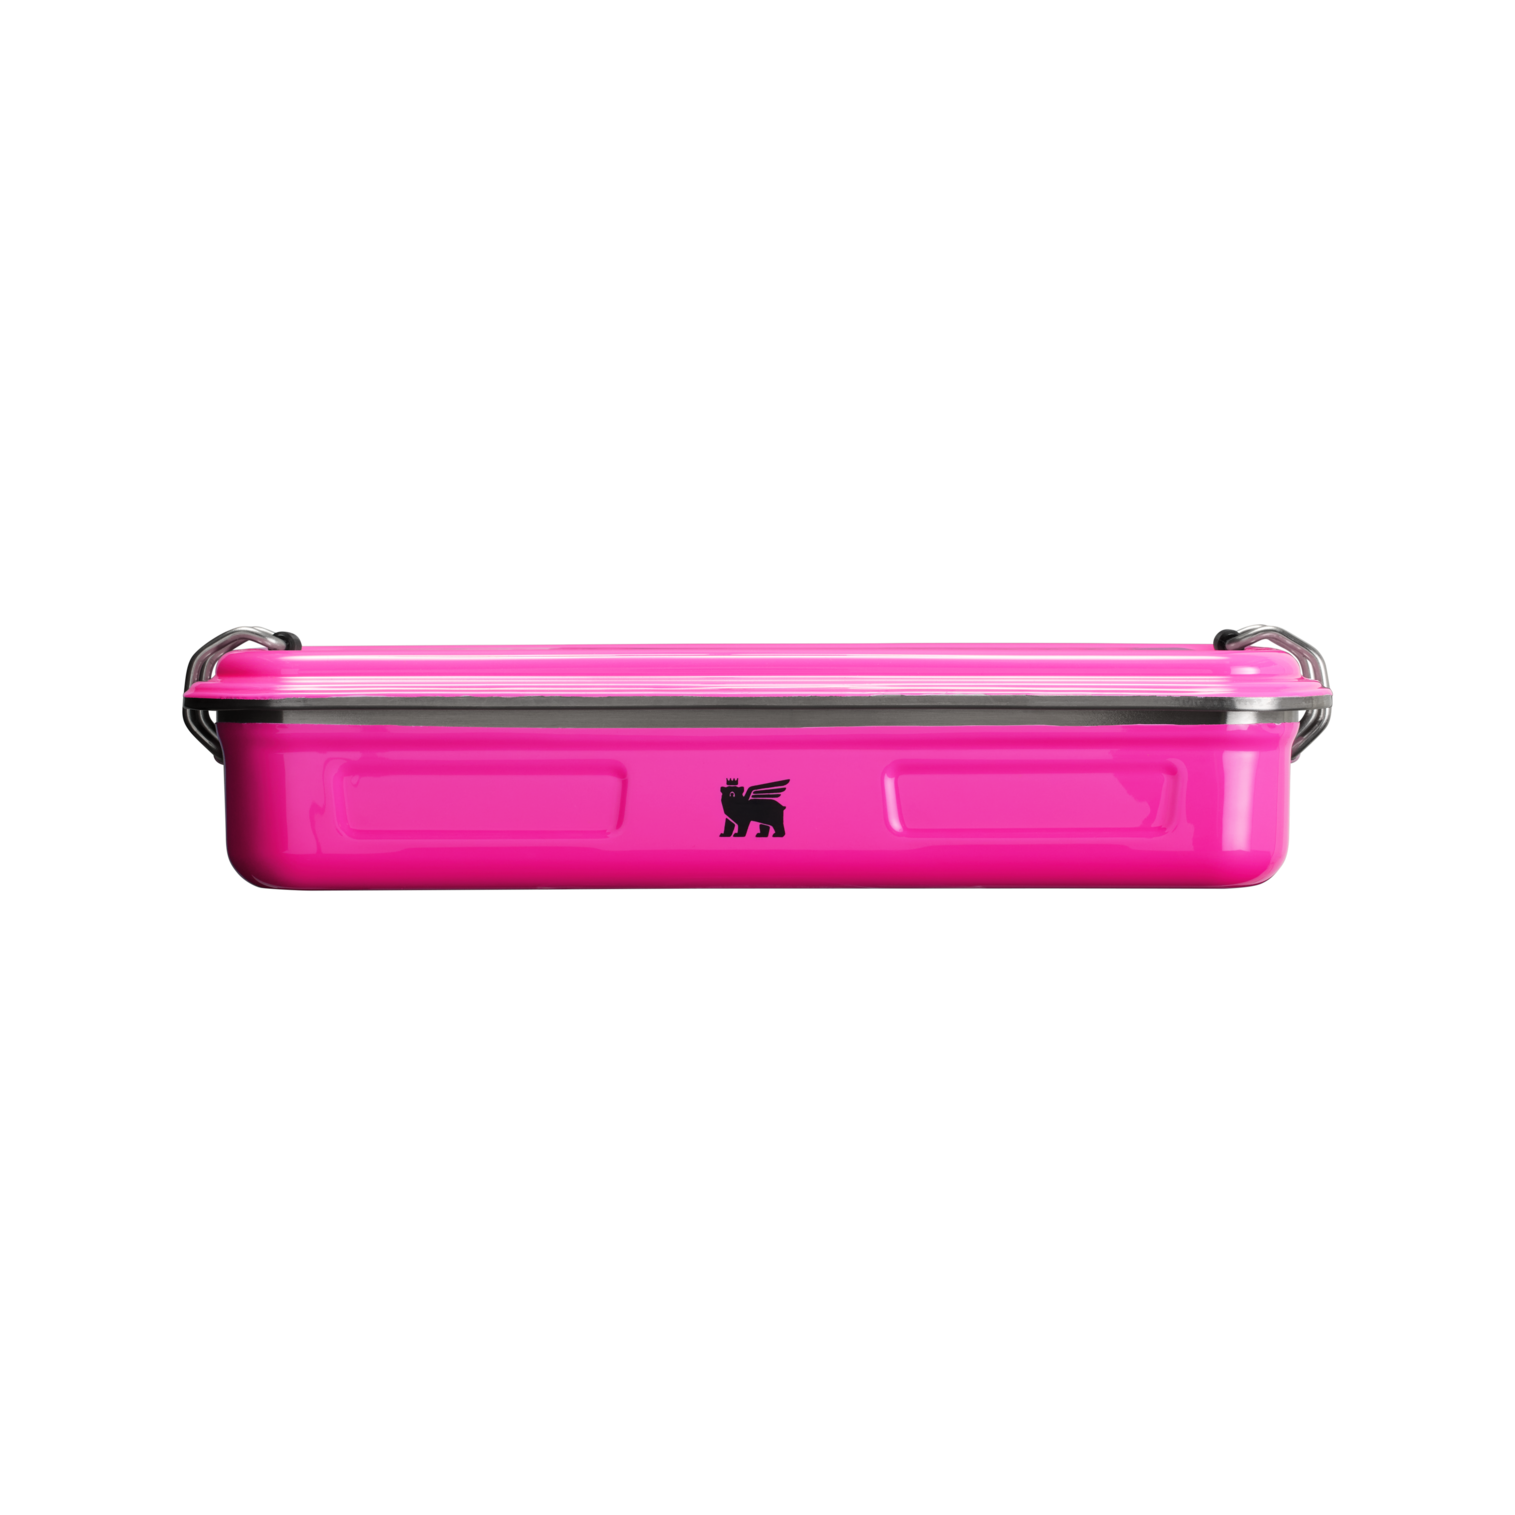 The Neon Classic Legendary Useful Box | 1.25 QT: Electric Pink